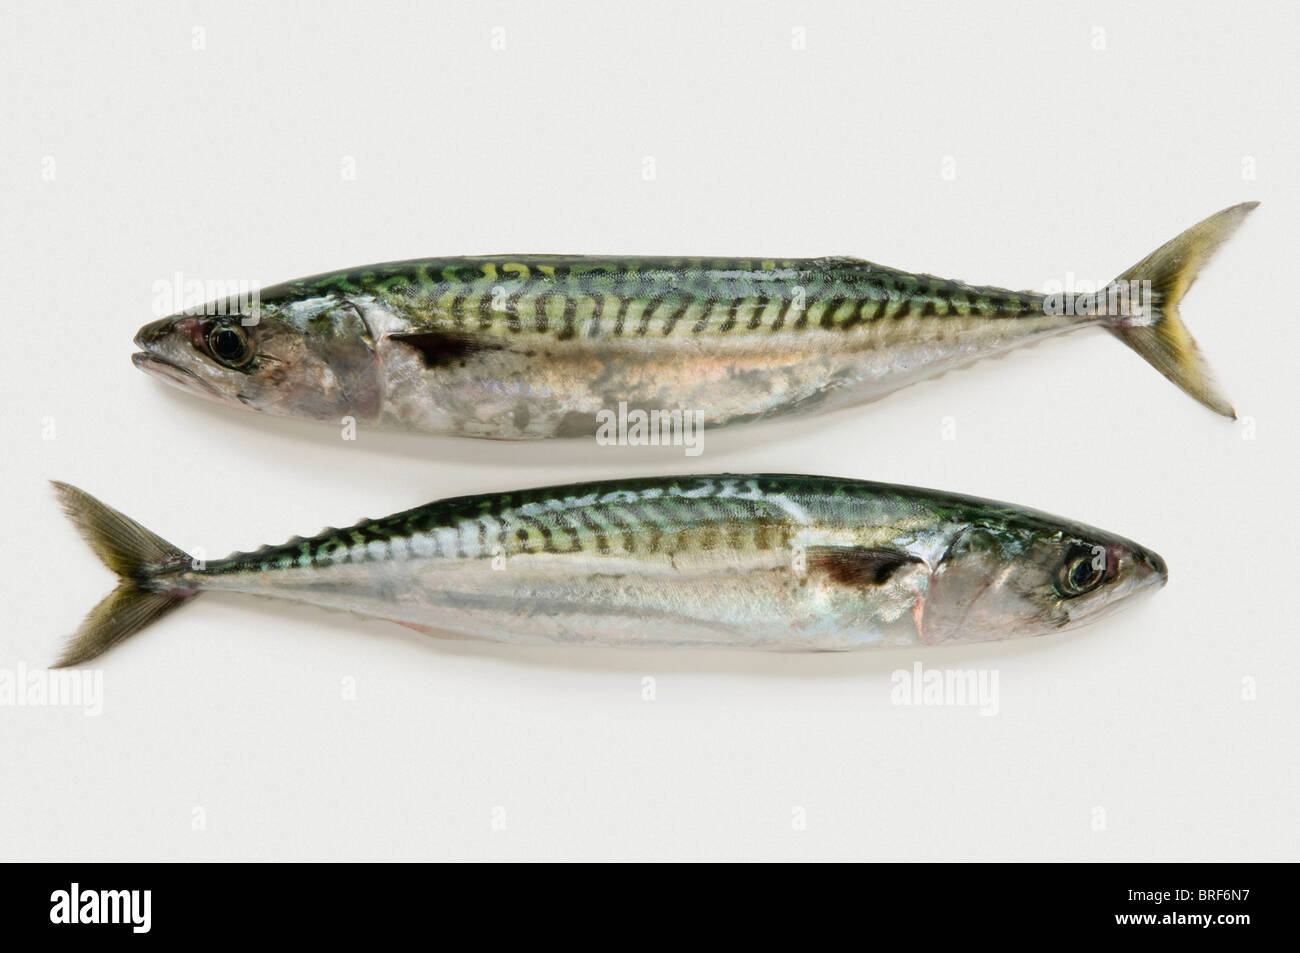 Two mackerels on white background, close-up Stock Photo